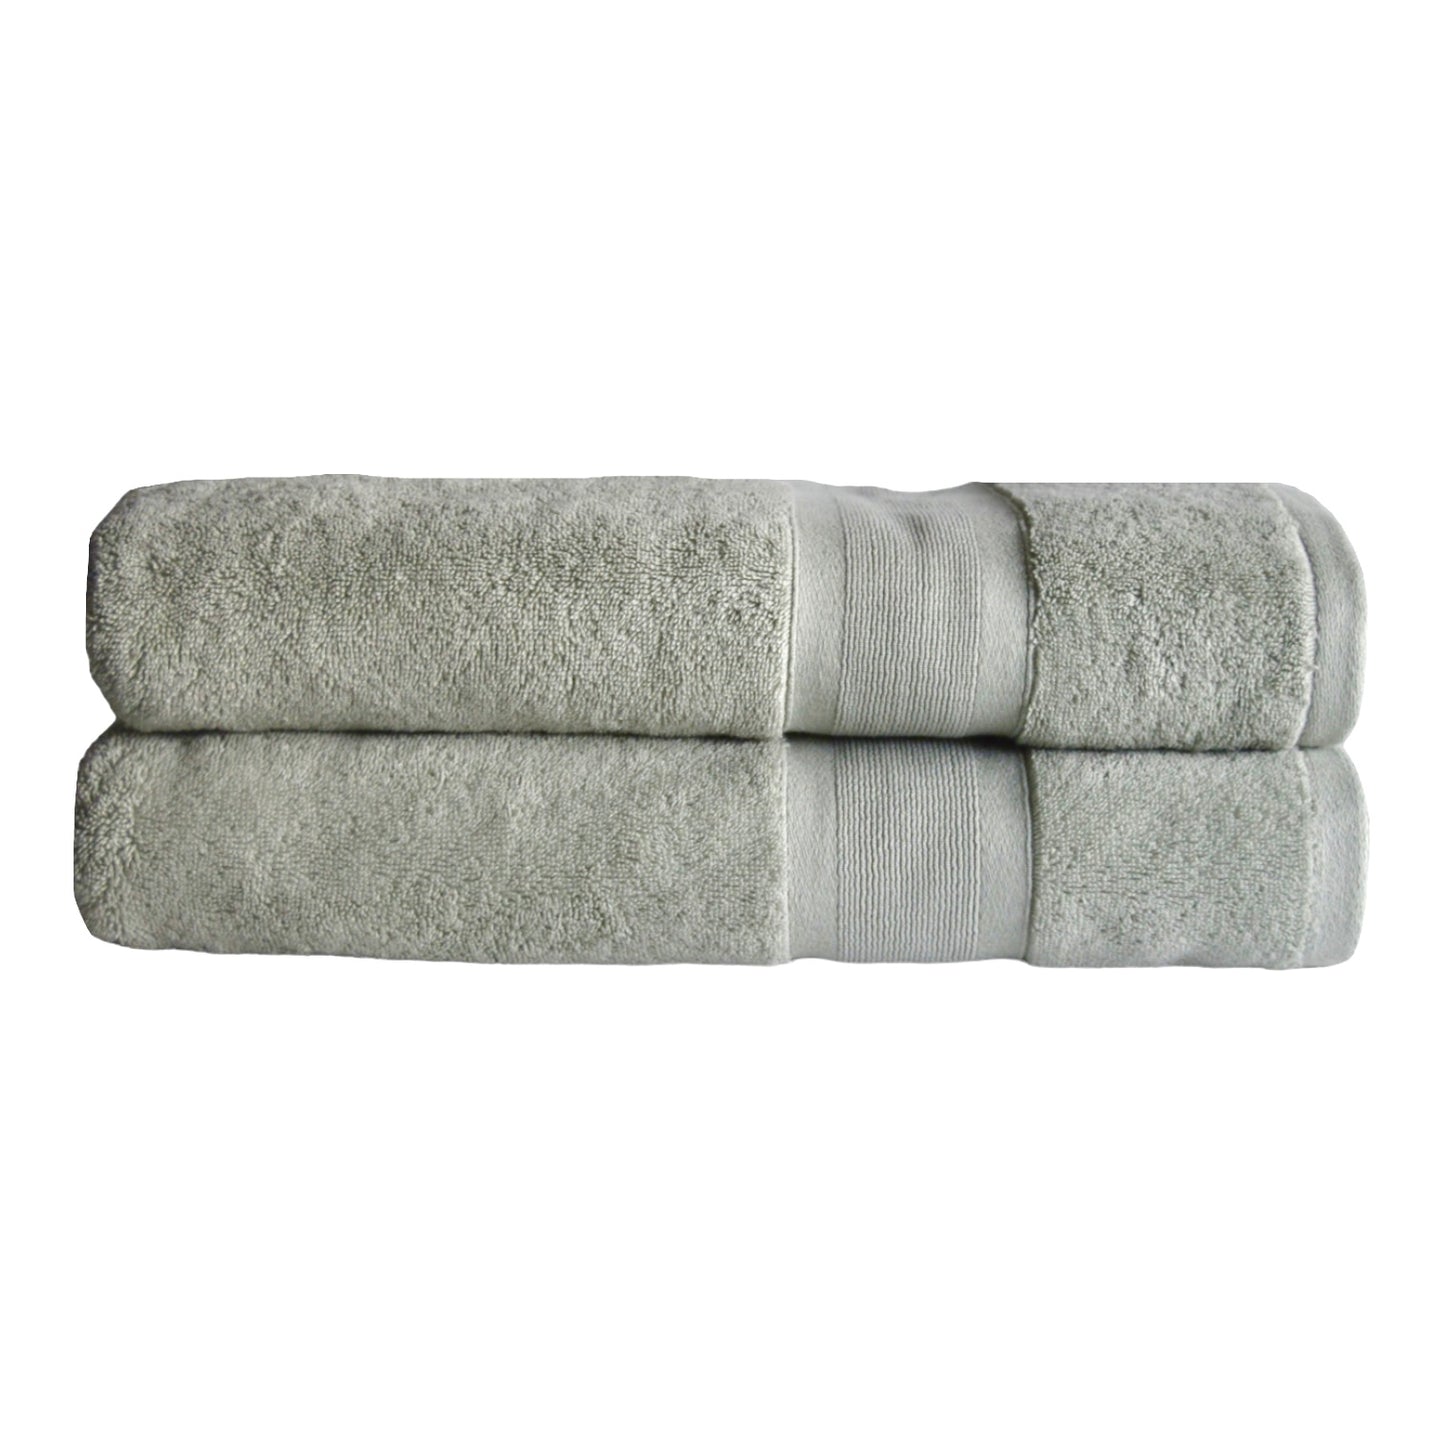 Combed Turkish Cotton Towel Set in Pale Sage color